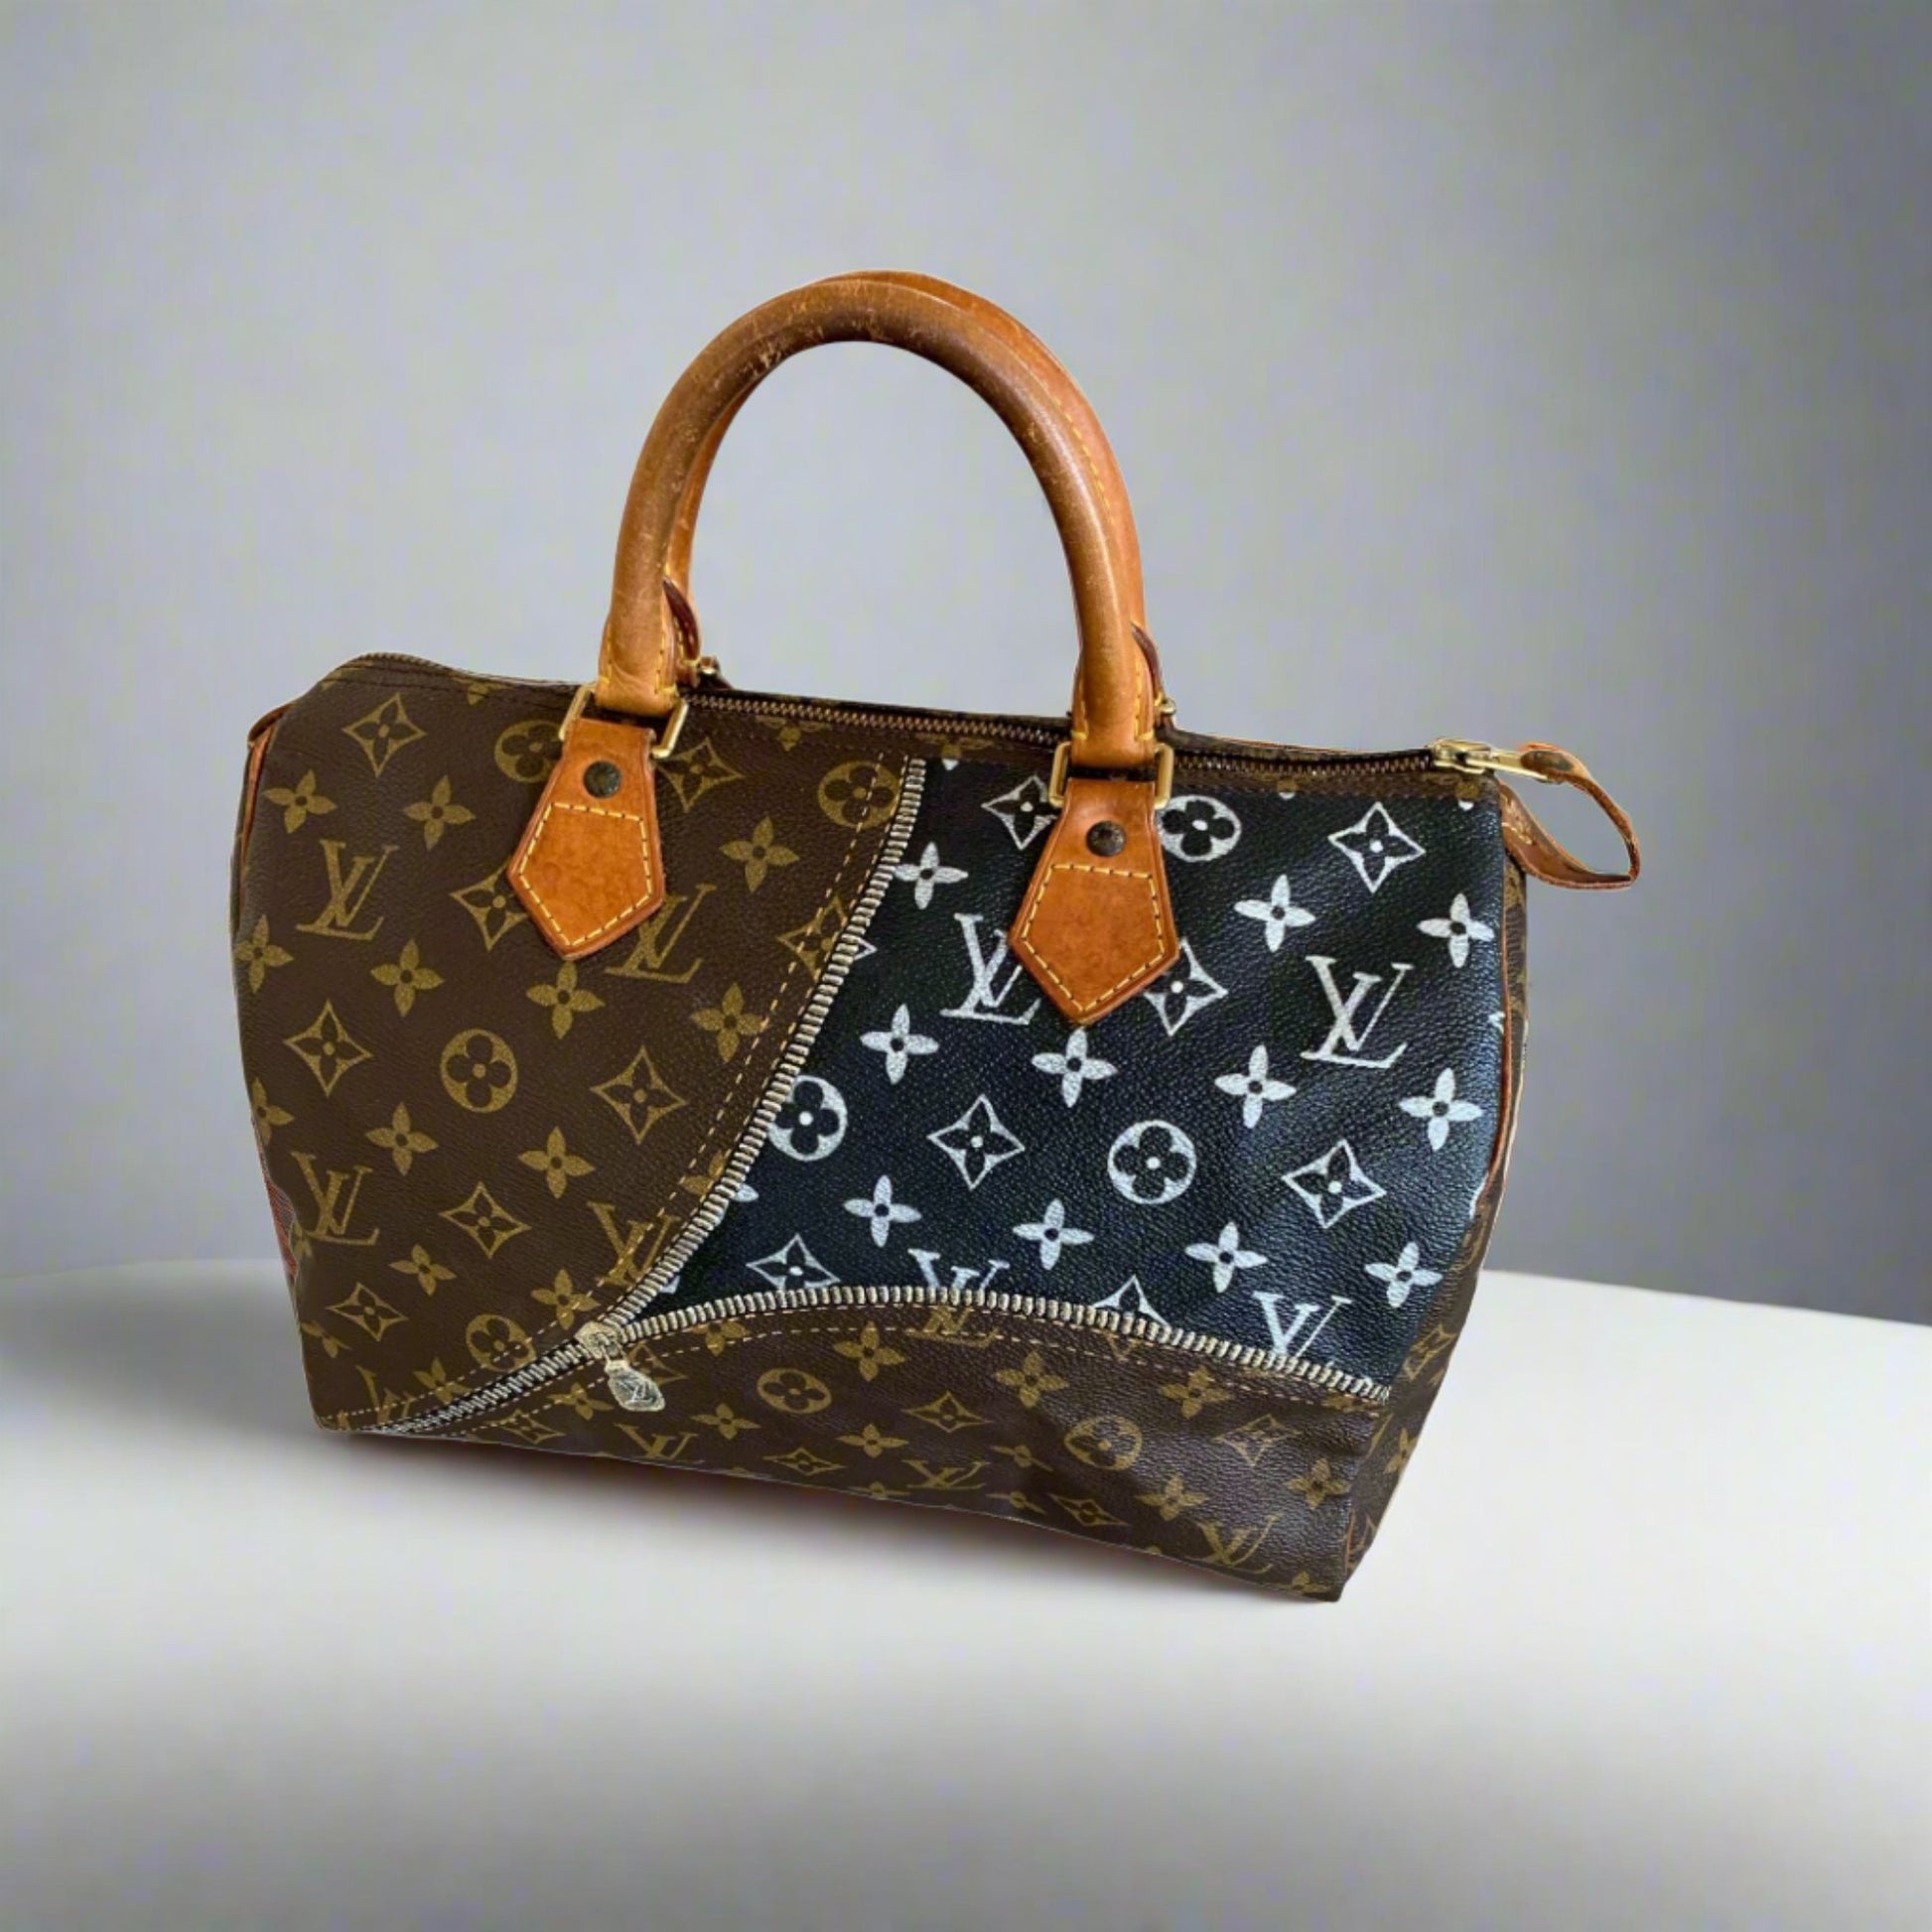 Buy LOUIS VUITTON Bags & Handbags online - Women - 1 products